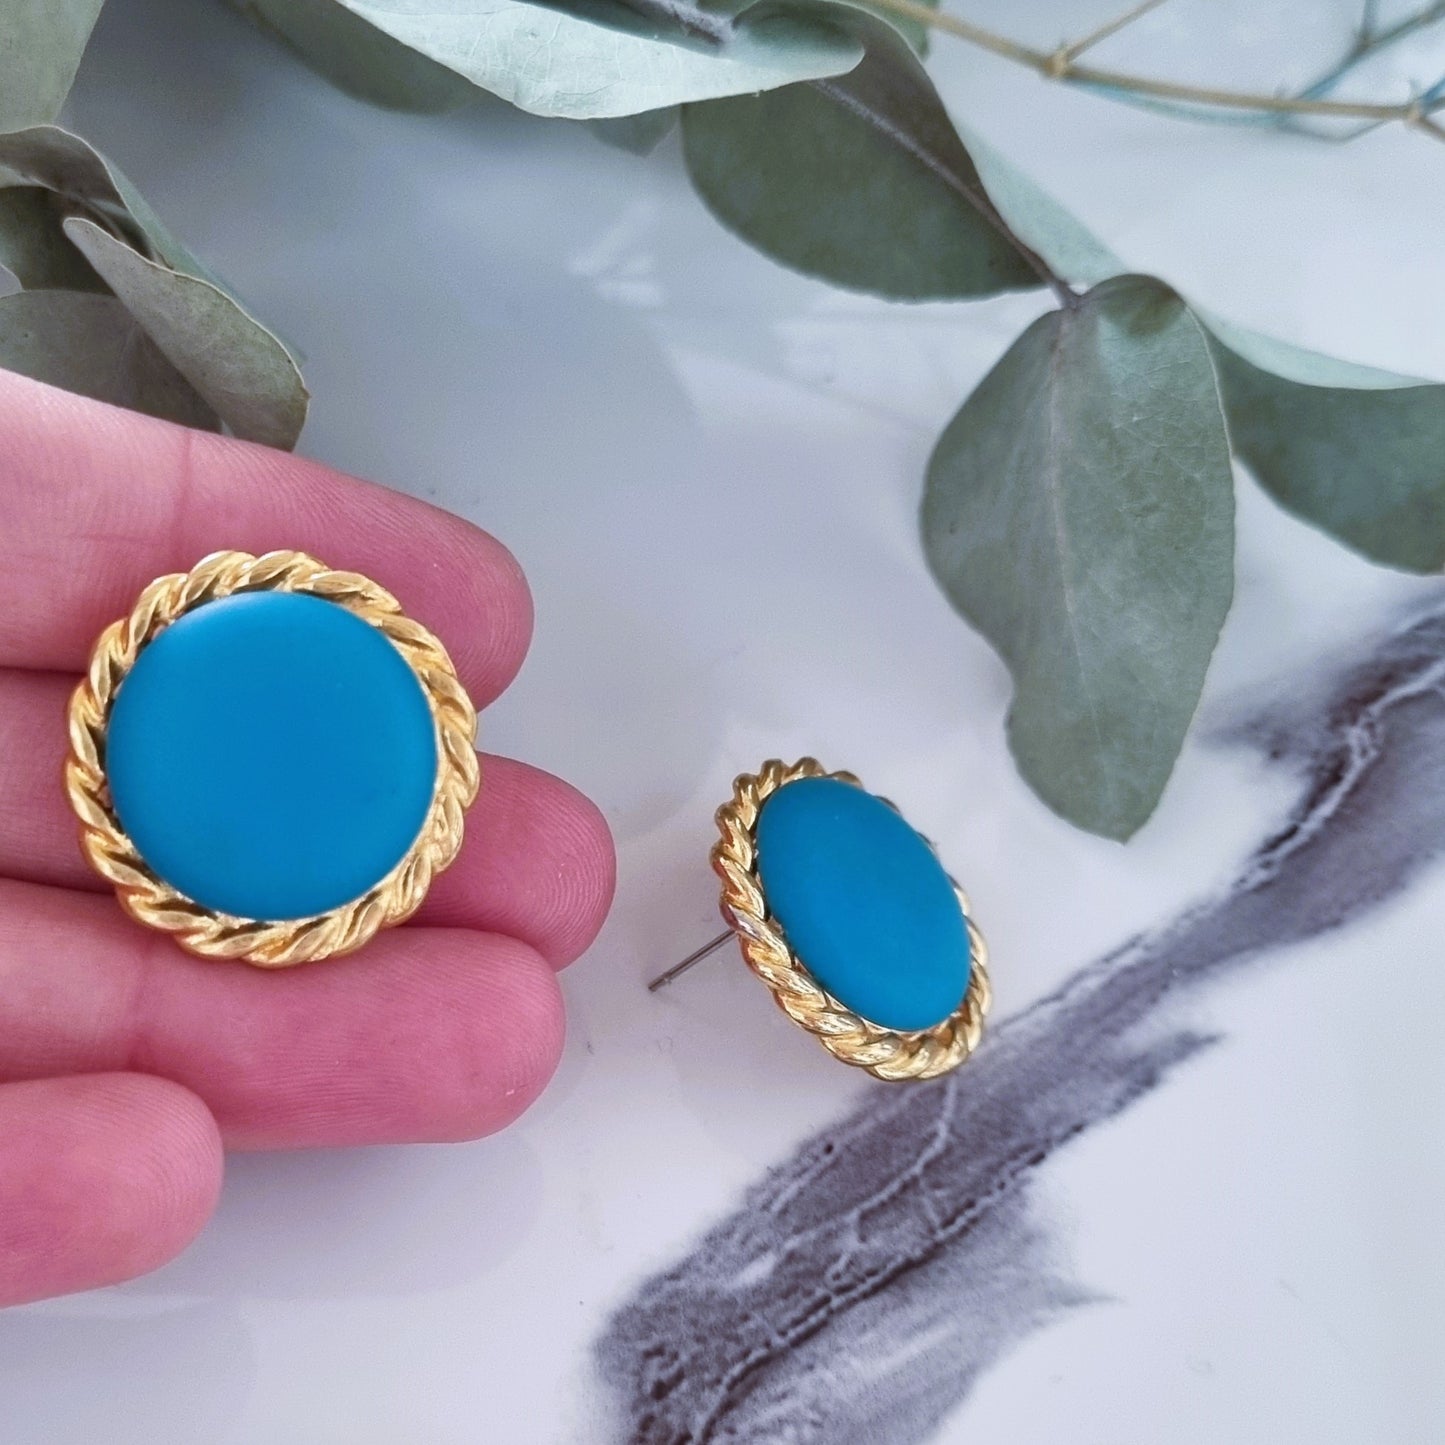 Vintage earrings - Turquoise (2 options)